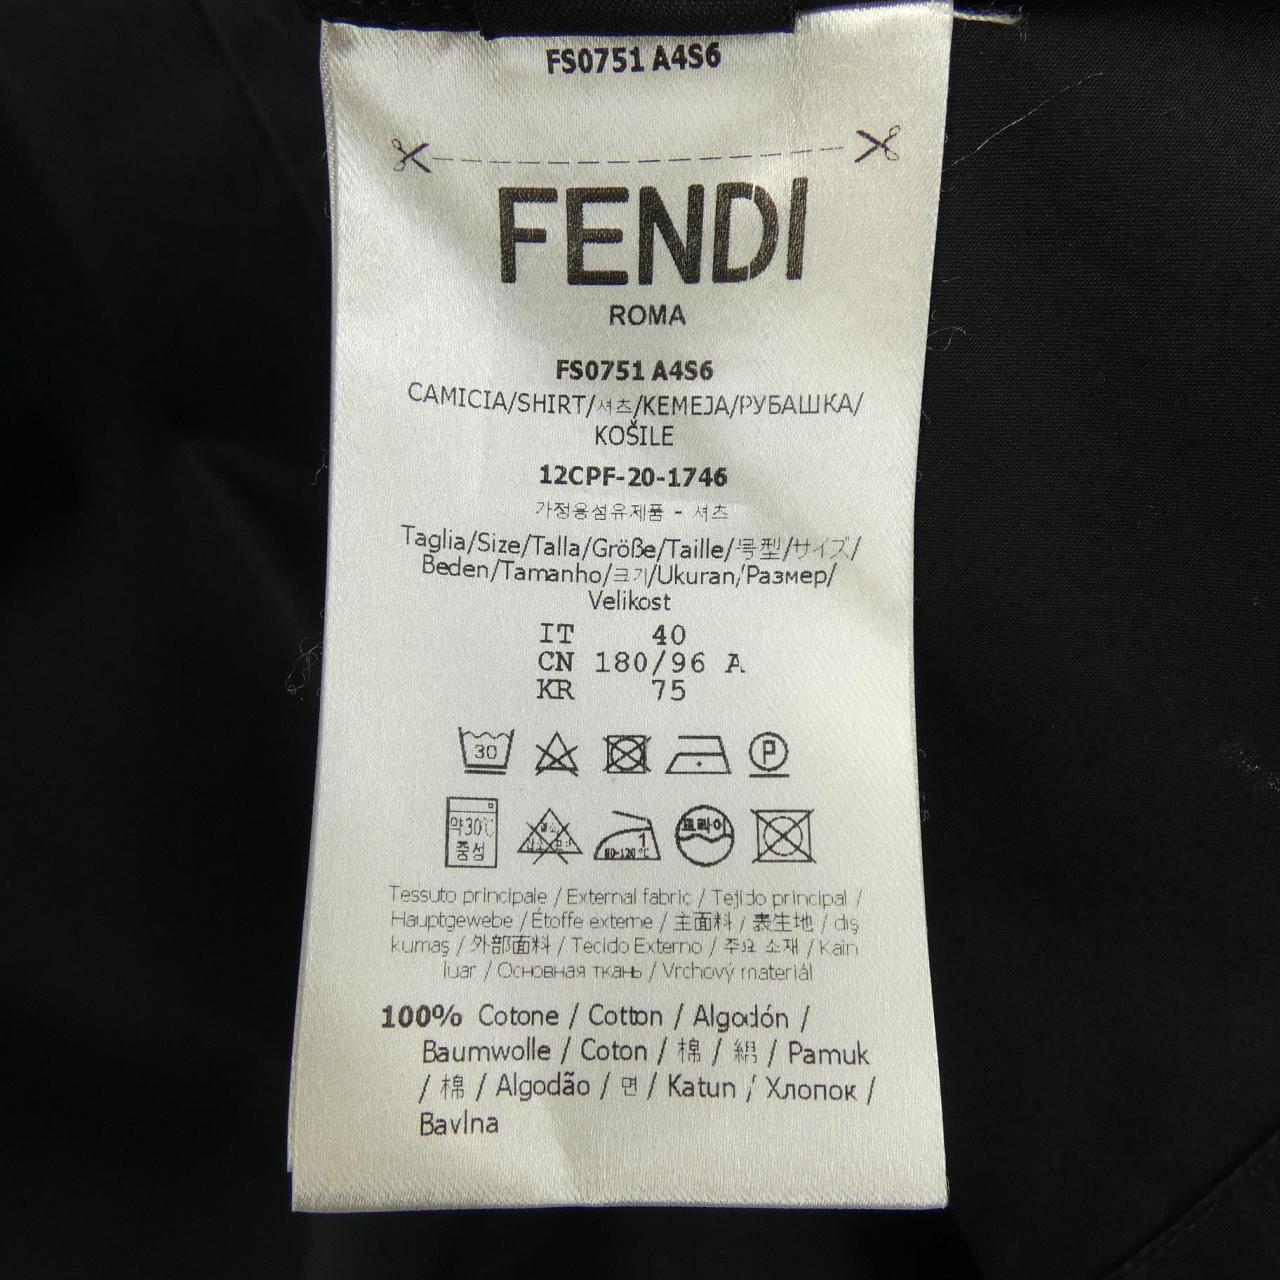 FENDI shirt